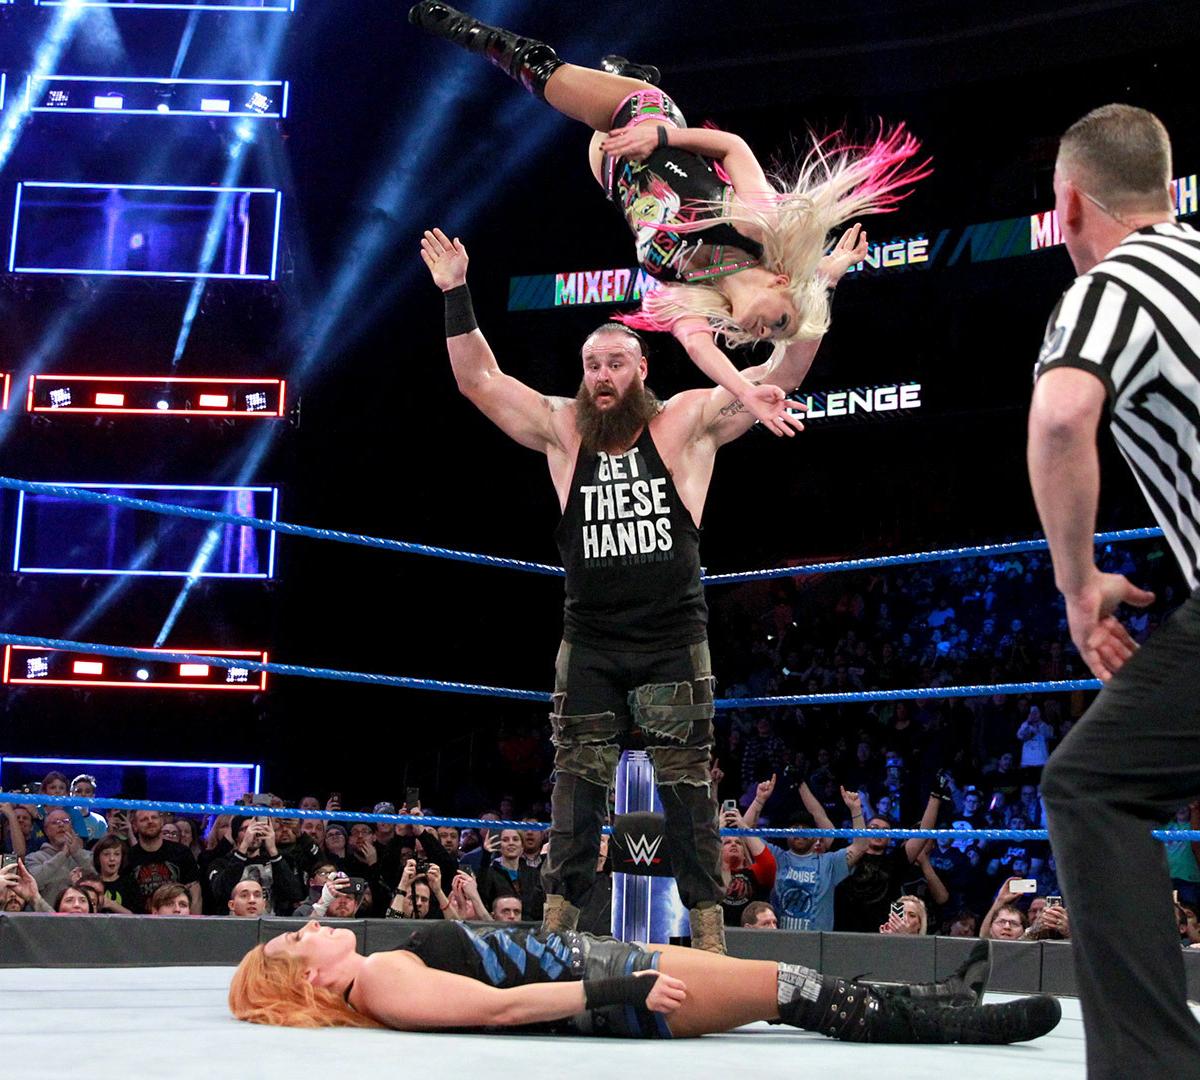 WWE Mixed Match Challenge: Zayn, Lynch vs. Bliss Winner and Reaction | News, Highlights, Stats, and | Bleacher Report